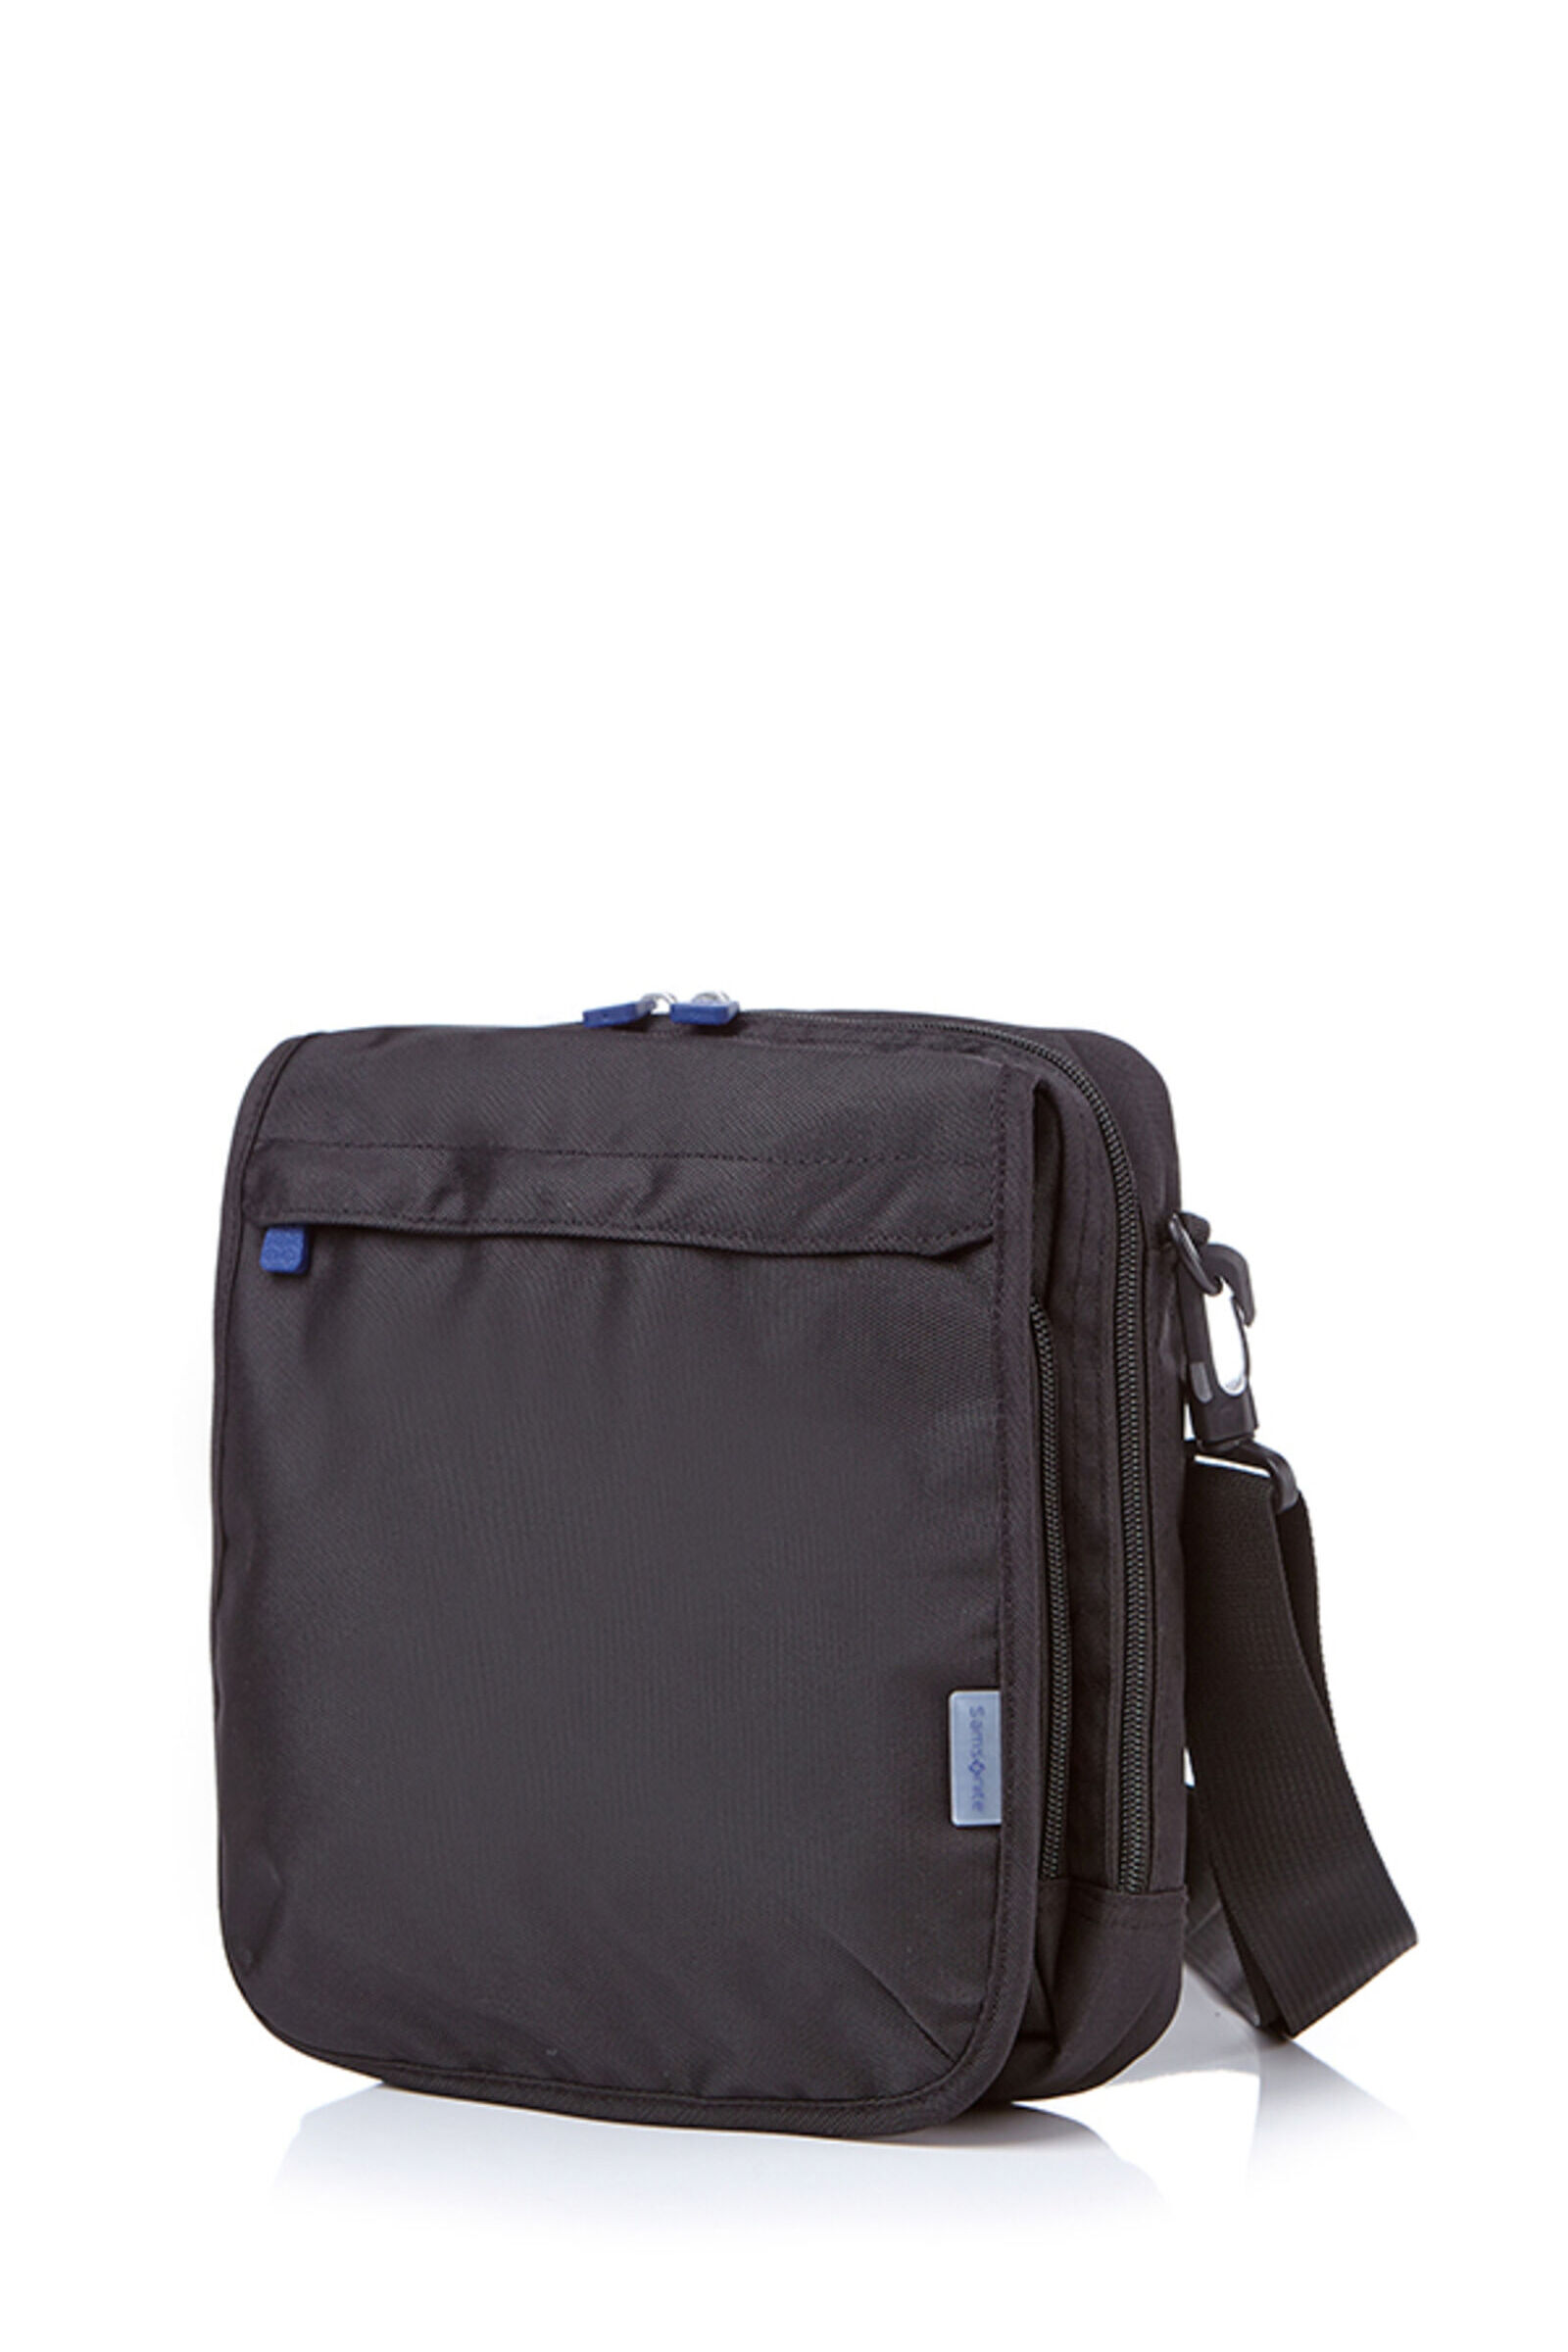 Samsonite Excursion Bag Fabric Black Softside Messenger Bag Z34 0 09  054  Amazonin Fashion